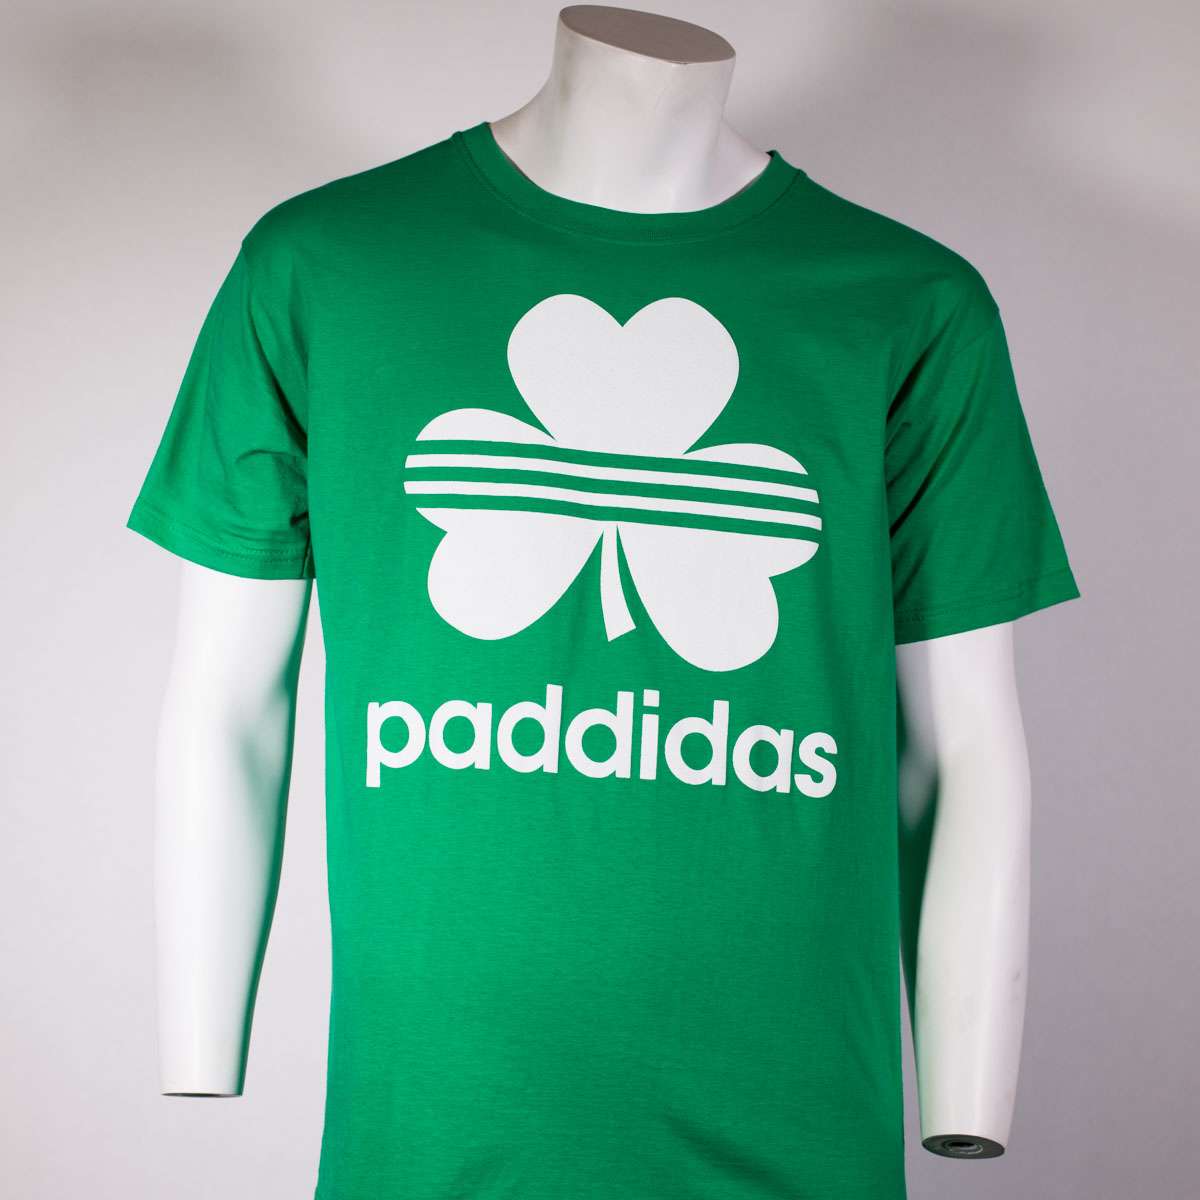 Paddidas Green Shamrock Shirt - Zhivago Gifts